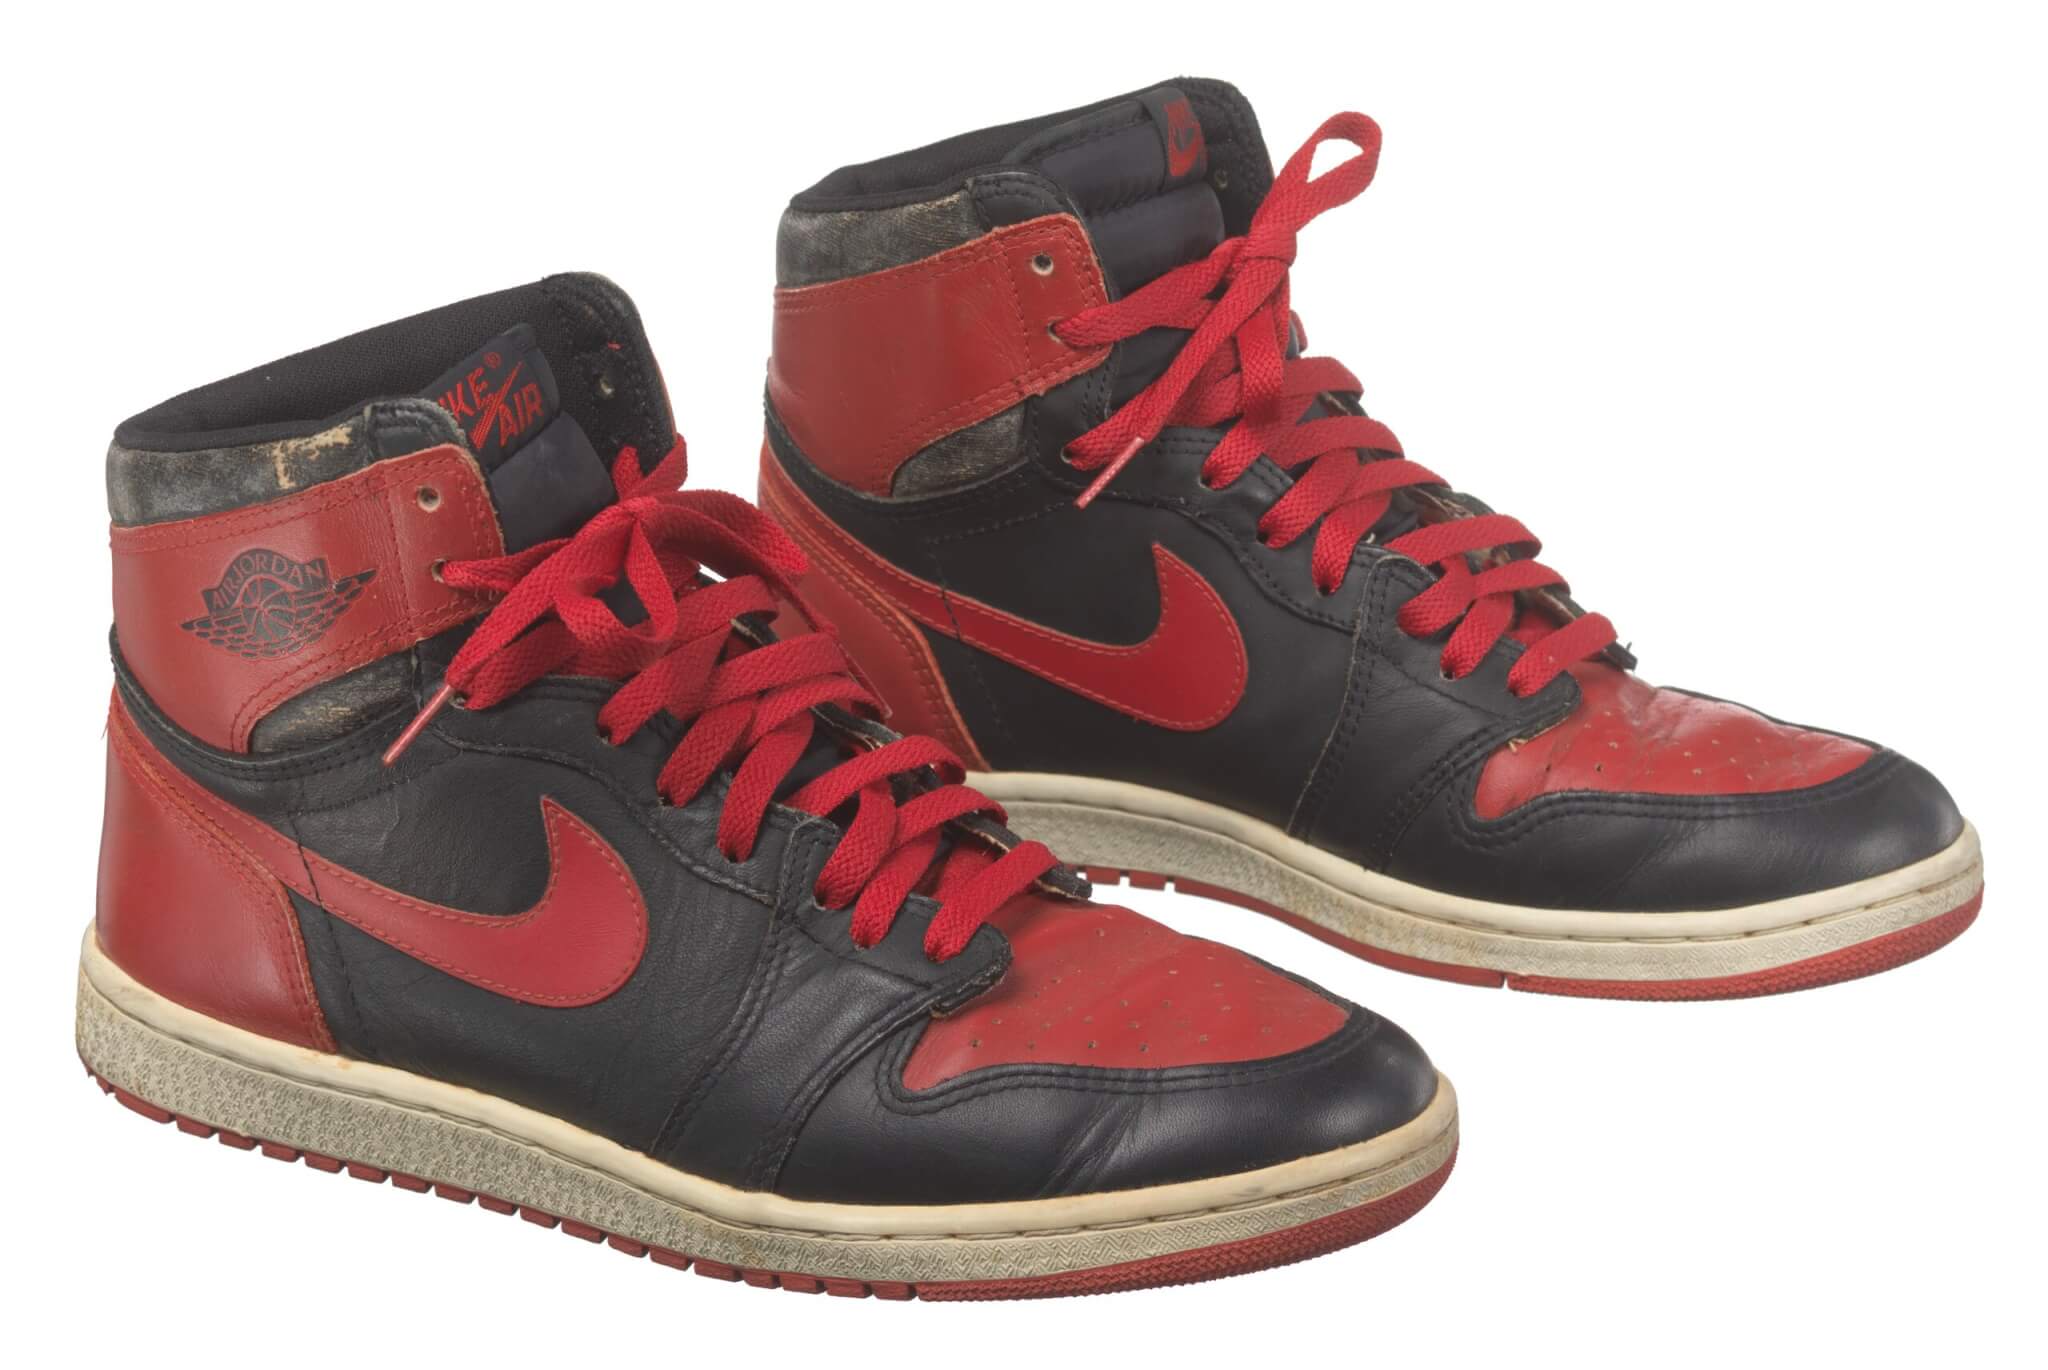 The 11 Best Air Jordan XI Sneakers of All Time - Sneaker Fortress